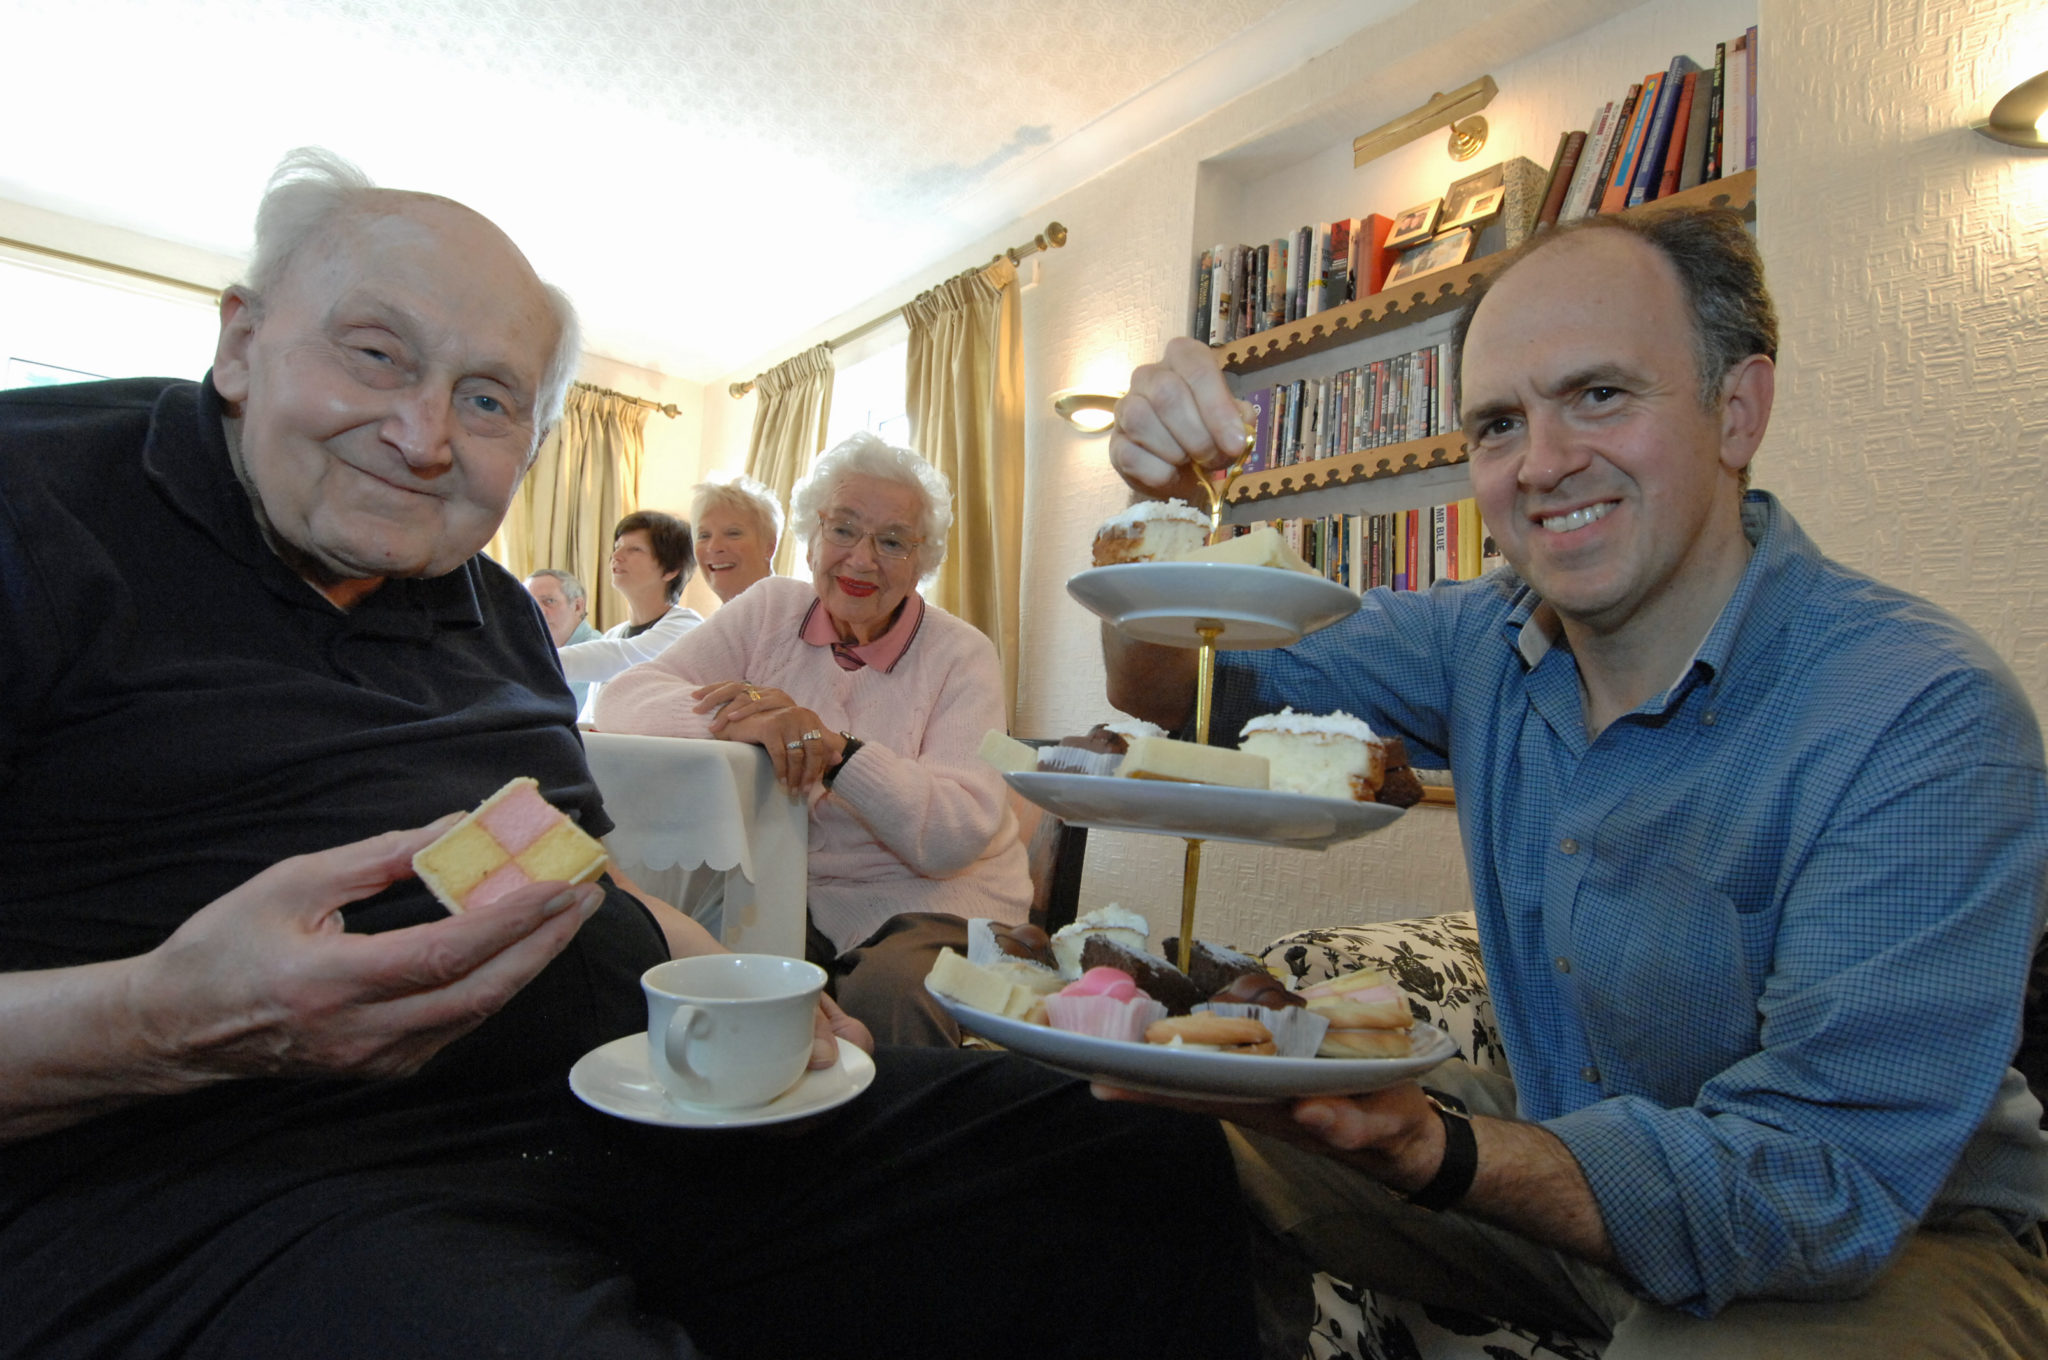 Contact the Elderly Tea party run by volunteers